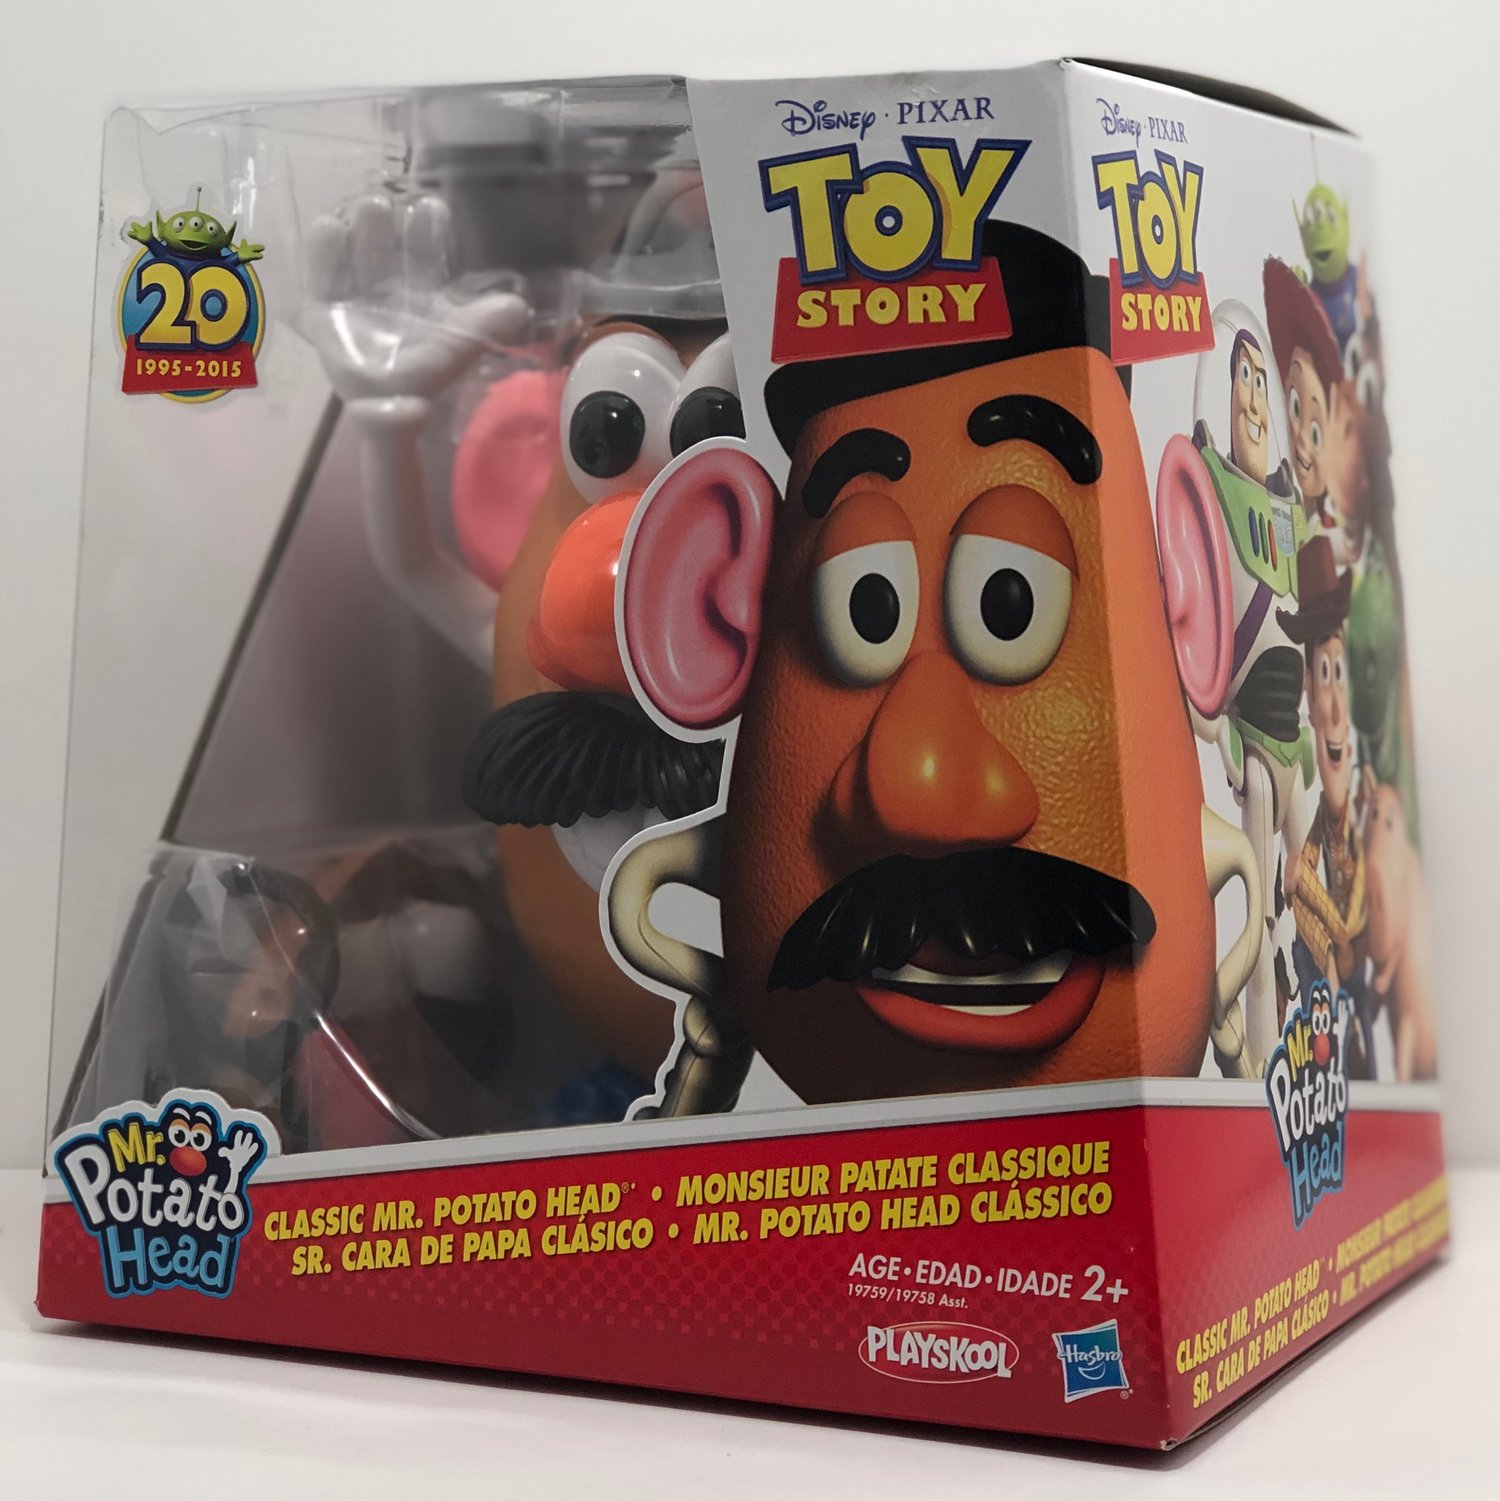 Image of Mr. Potato Head Disney Pixar 1995-2015 Playskool Toy Story 3 Classic